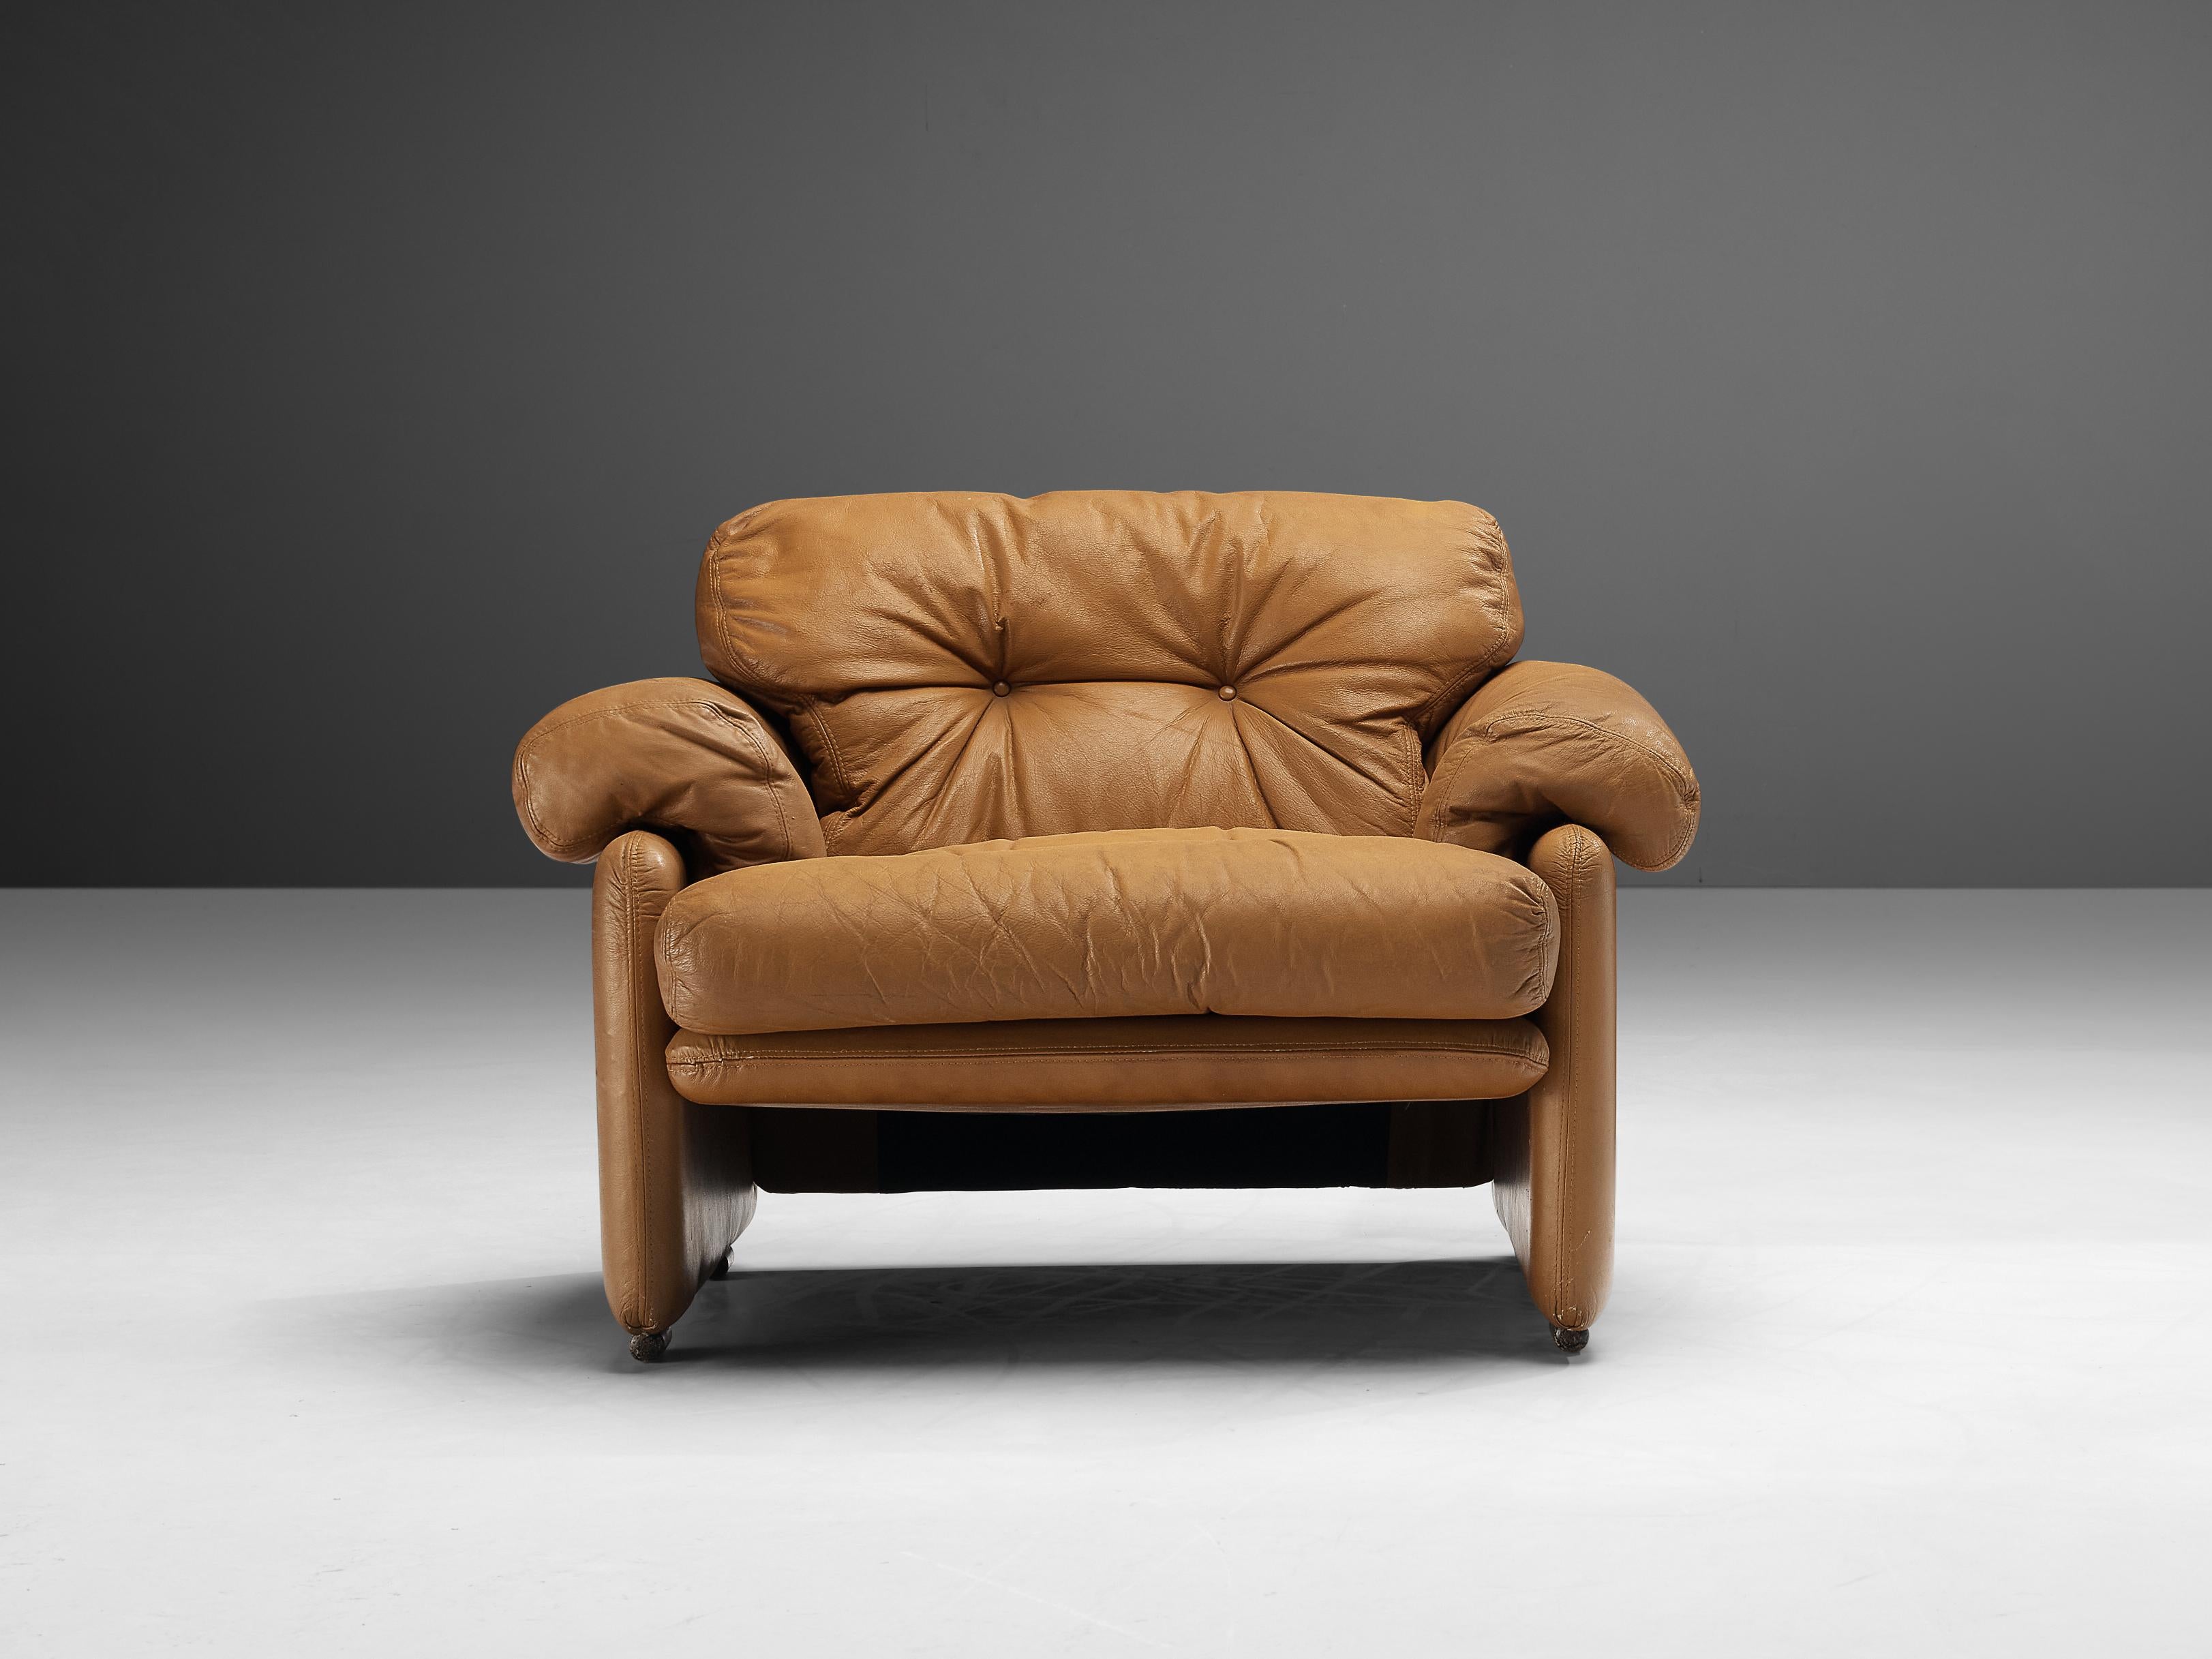 Afra & Tobia Scarpa for B&B Italia 'Coronado' Lounge Chair in Cognac Leather For Sale 1